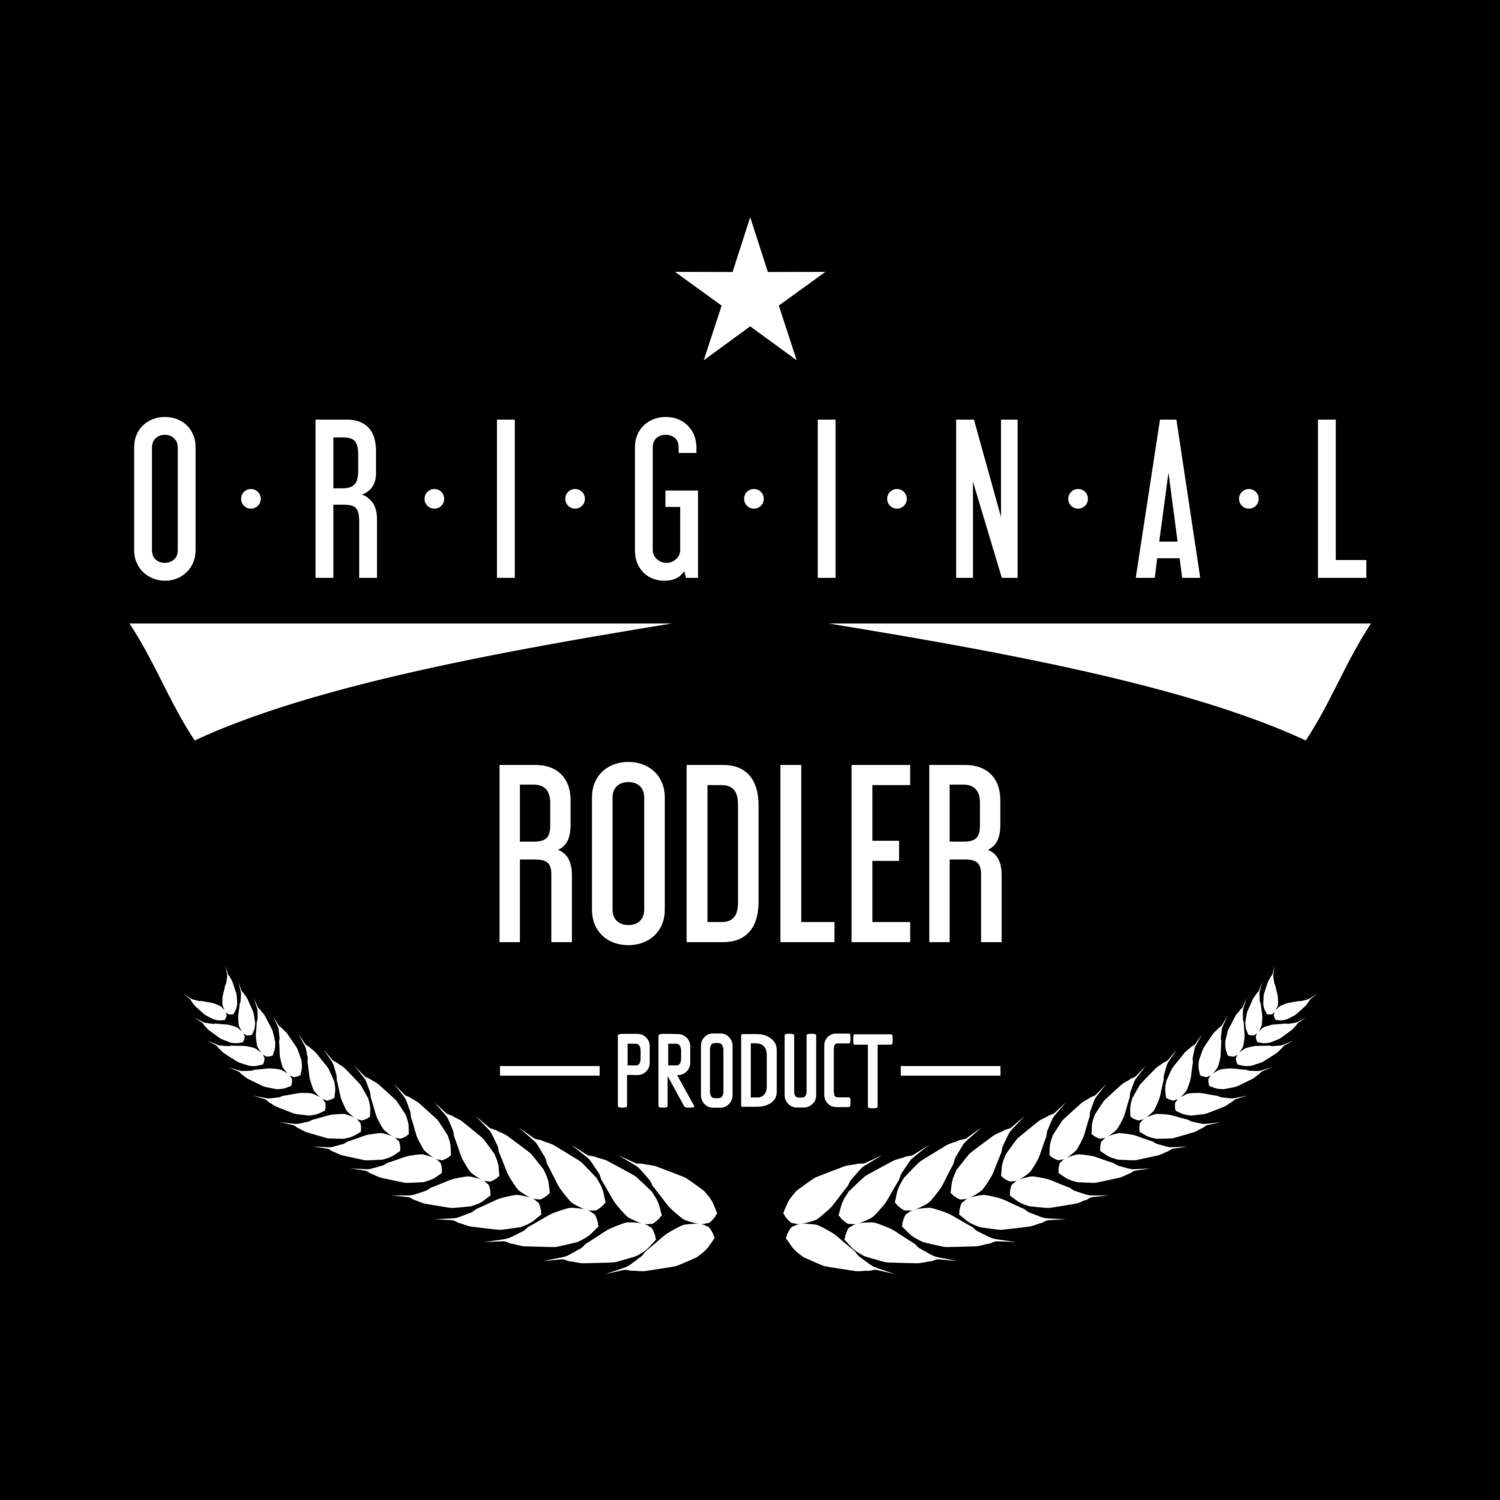 Rodler T-Shirt »Original Product«